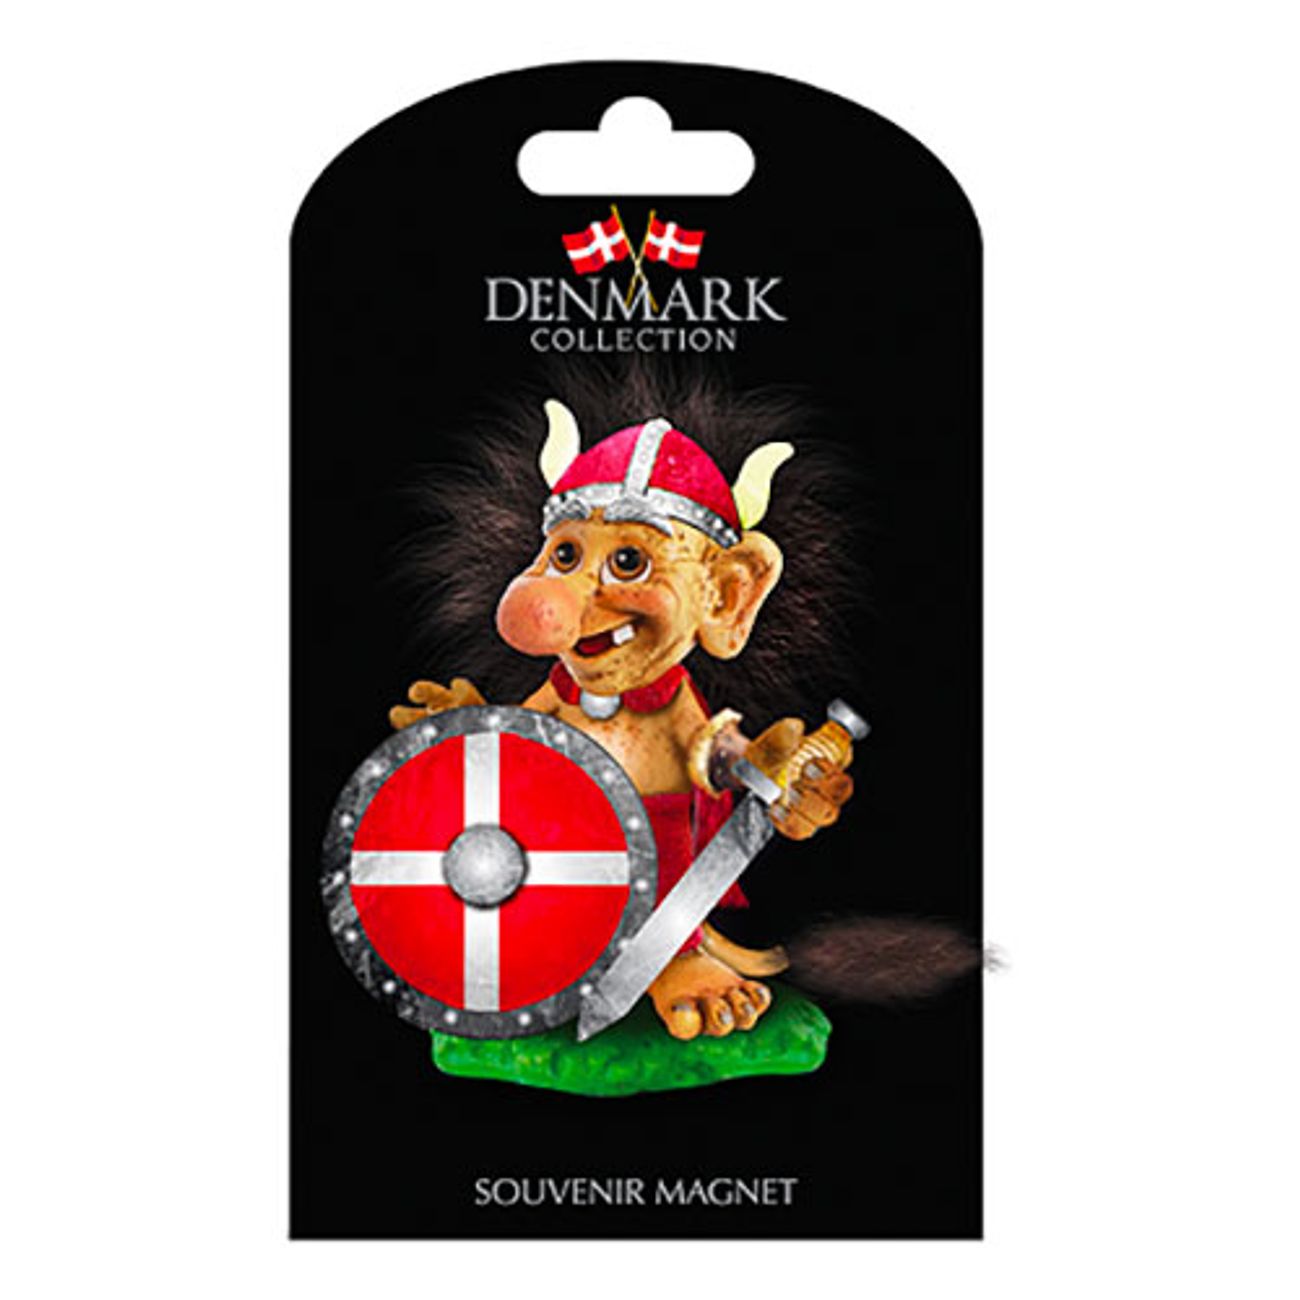 souvenir-magnet-denmark-troll-1